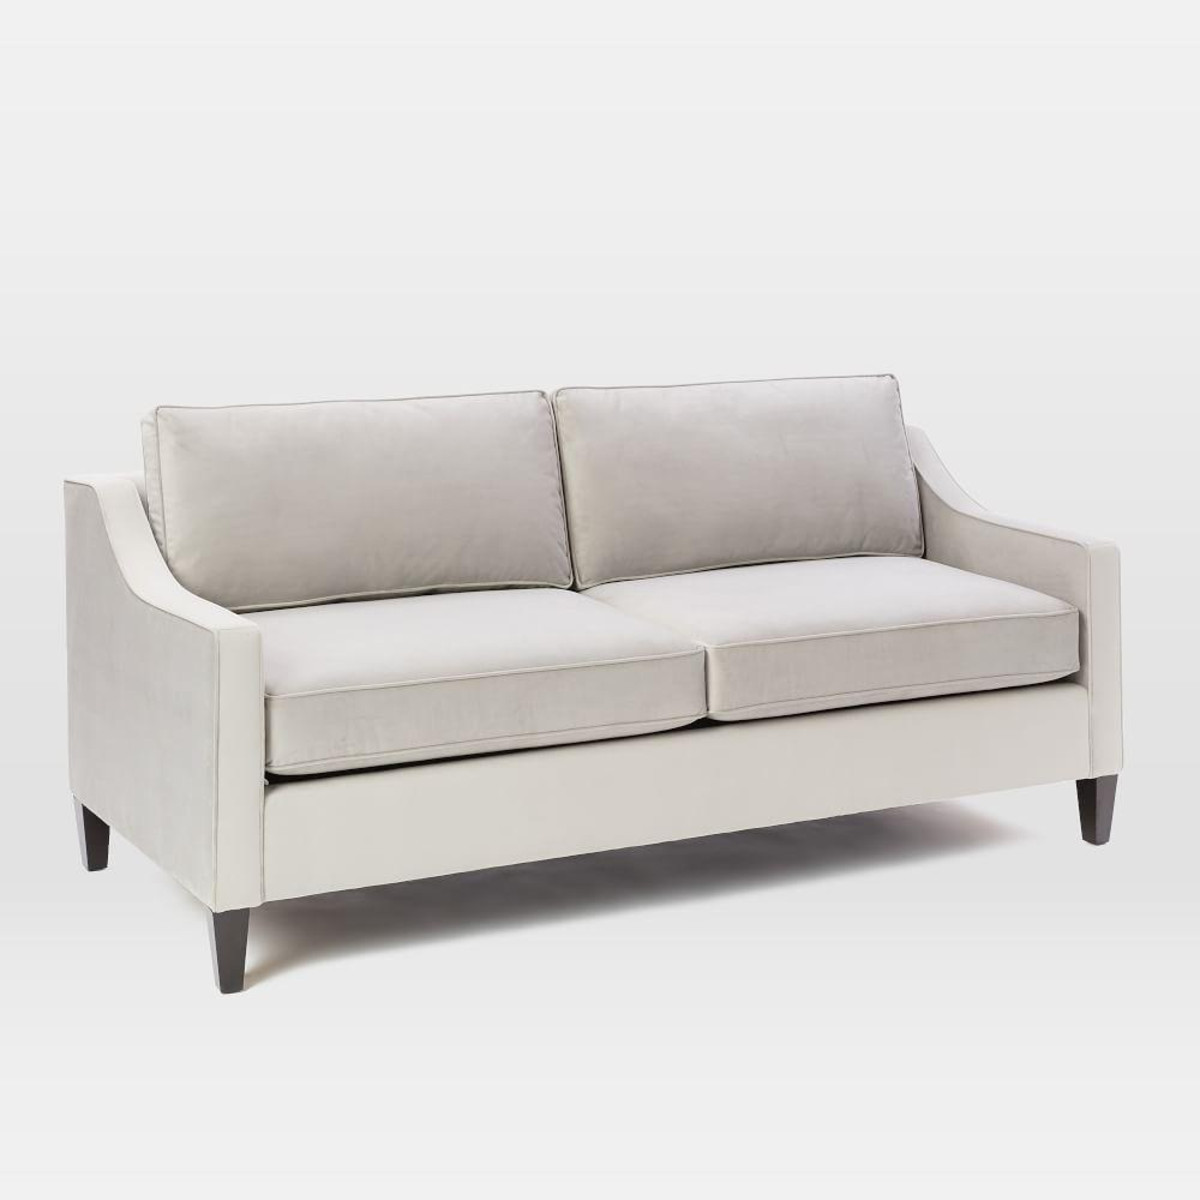 Best ideas about Velvet Sleeper Sofa
. Save or Pin Paidge Queen Sleeper Sofa 204 cm Dove Grey Now.